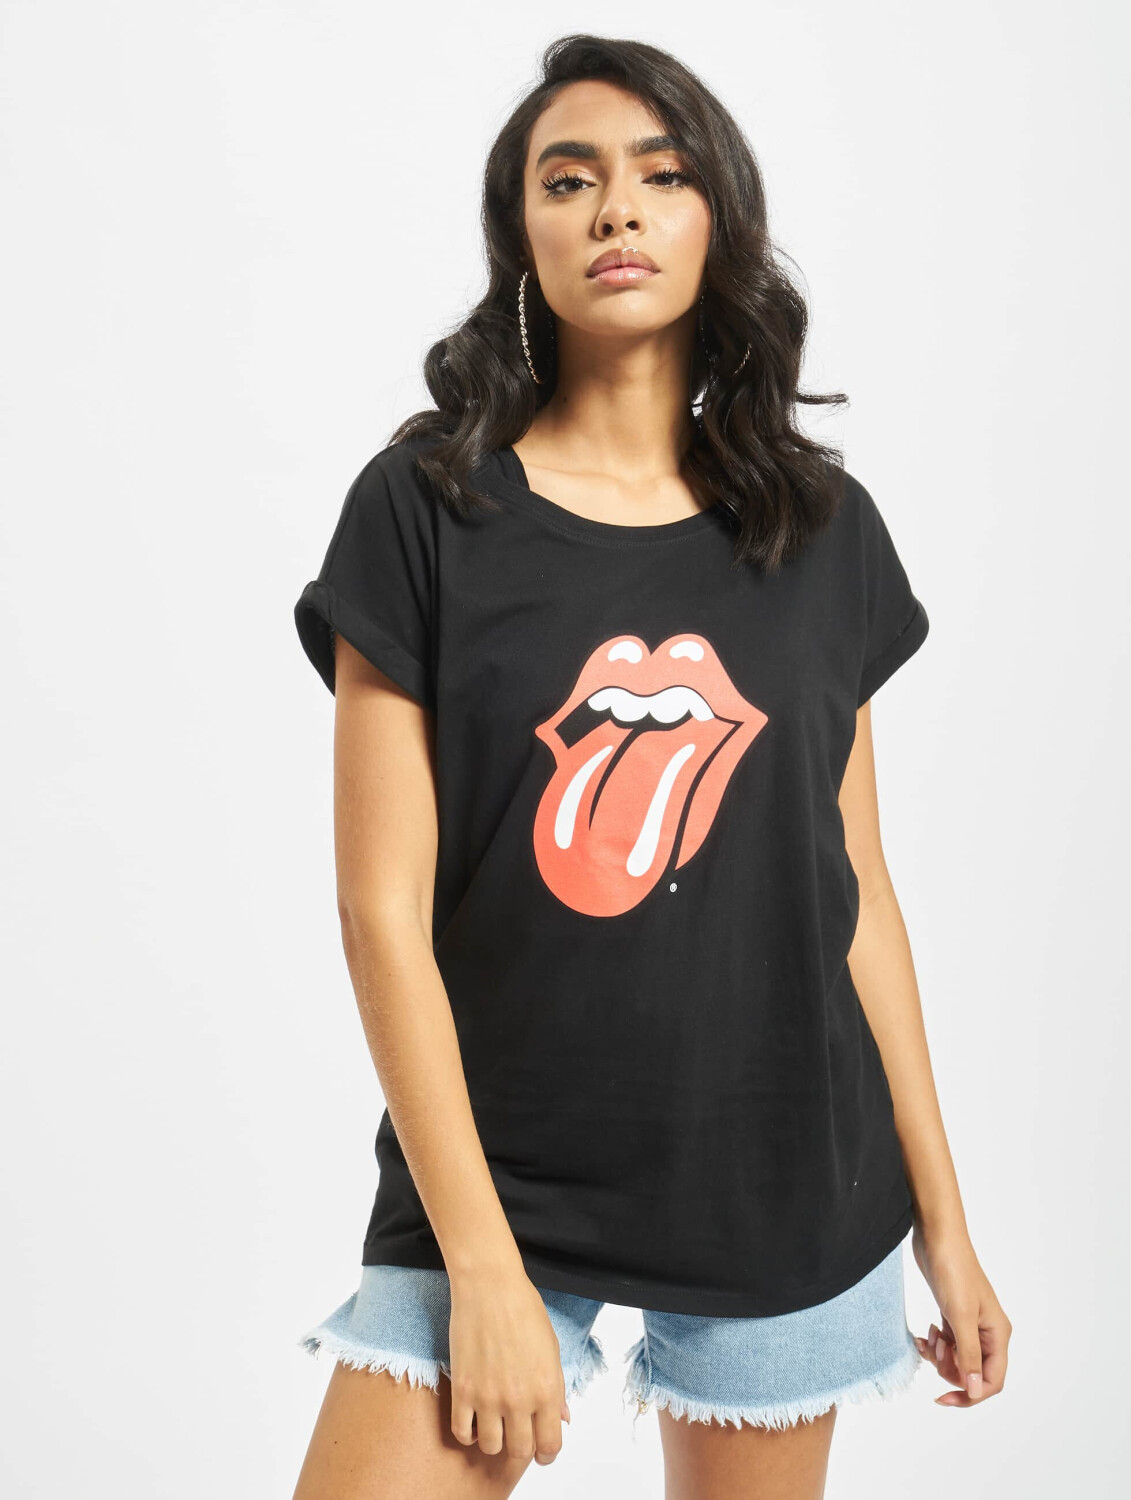 Merchcode T-Shirt Rolling Stones € Tongue black (MC326BLK) bei 17,49 Preisvergleich ab 